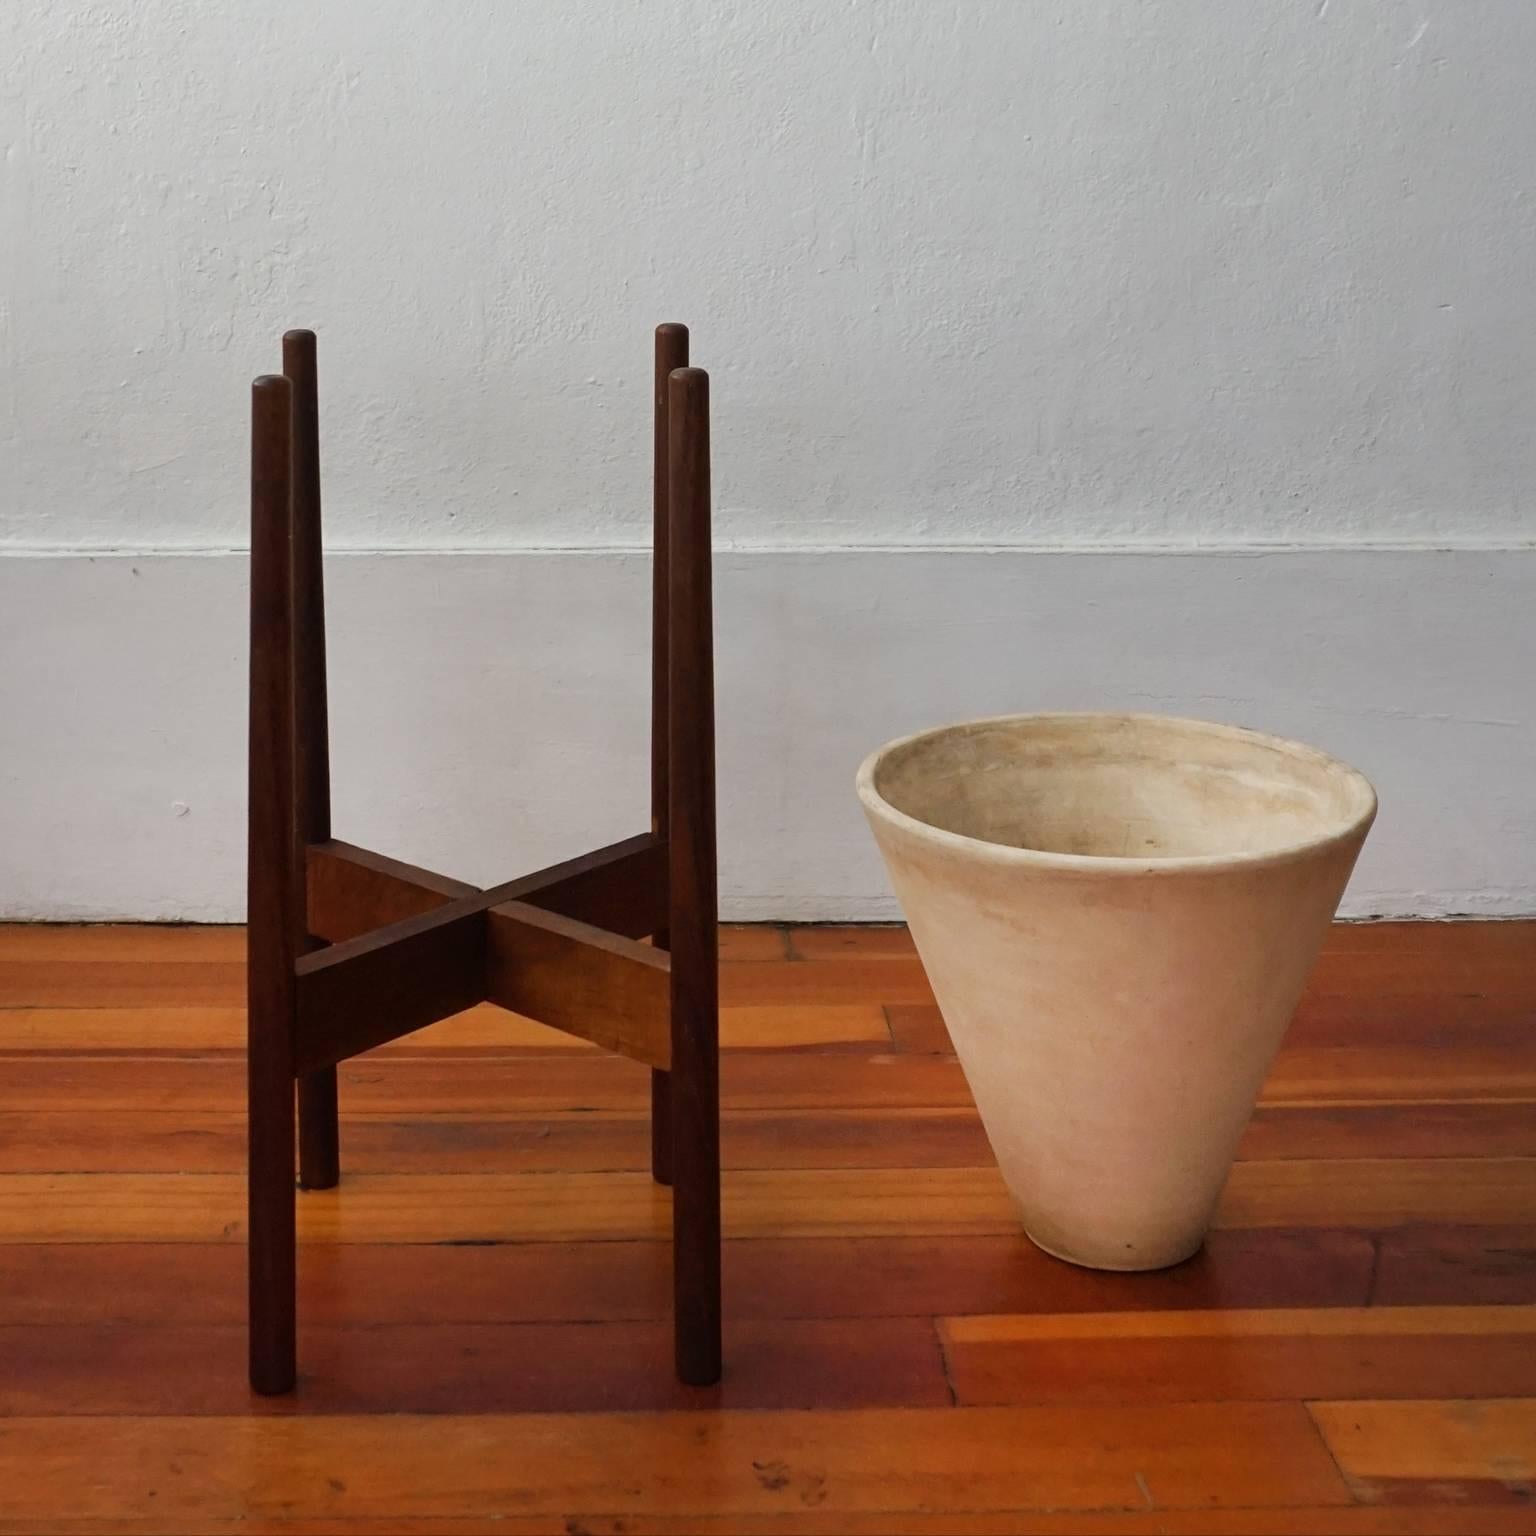 Ceramic La Gardo Tackett for Architectural Pottery Cone Planter with Wood Stand